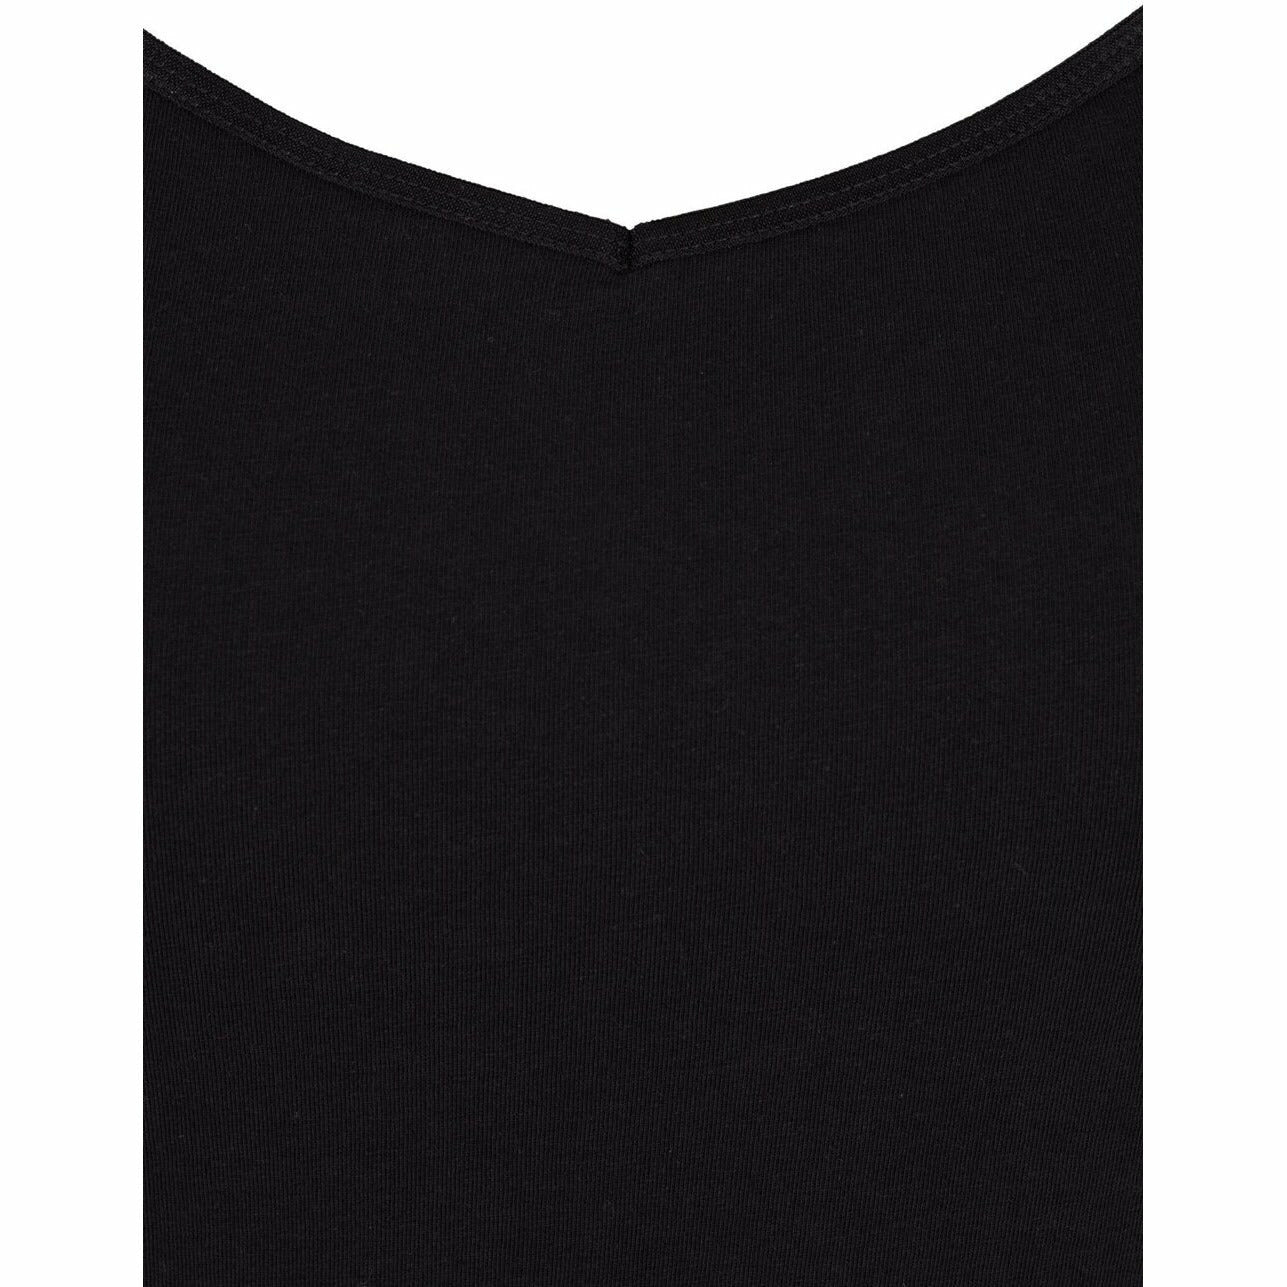 Long black vest top - Wardrobe Plus